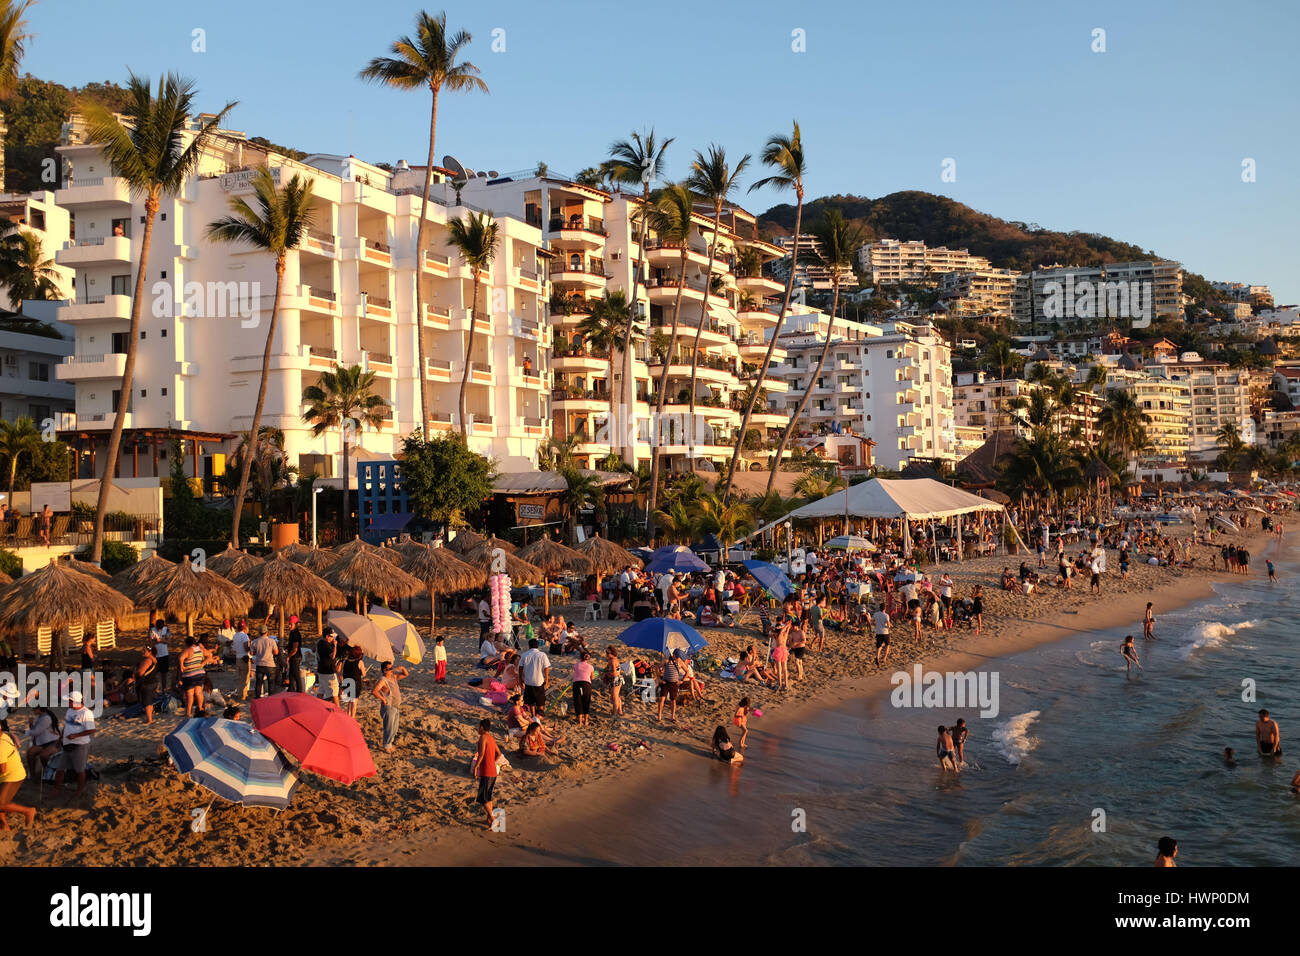 Mass tourism on beach in Puerto Vallarta, Mexico Stock Photo